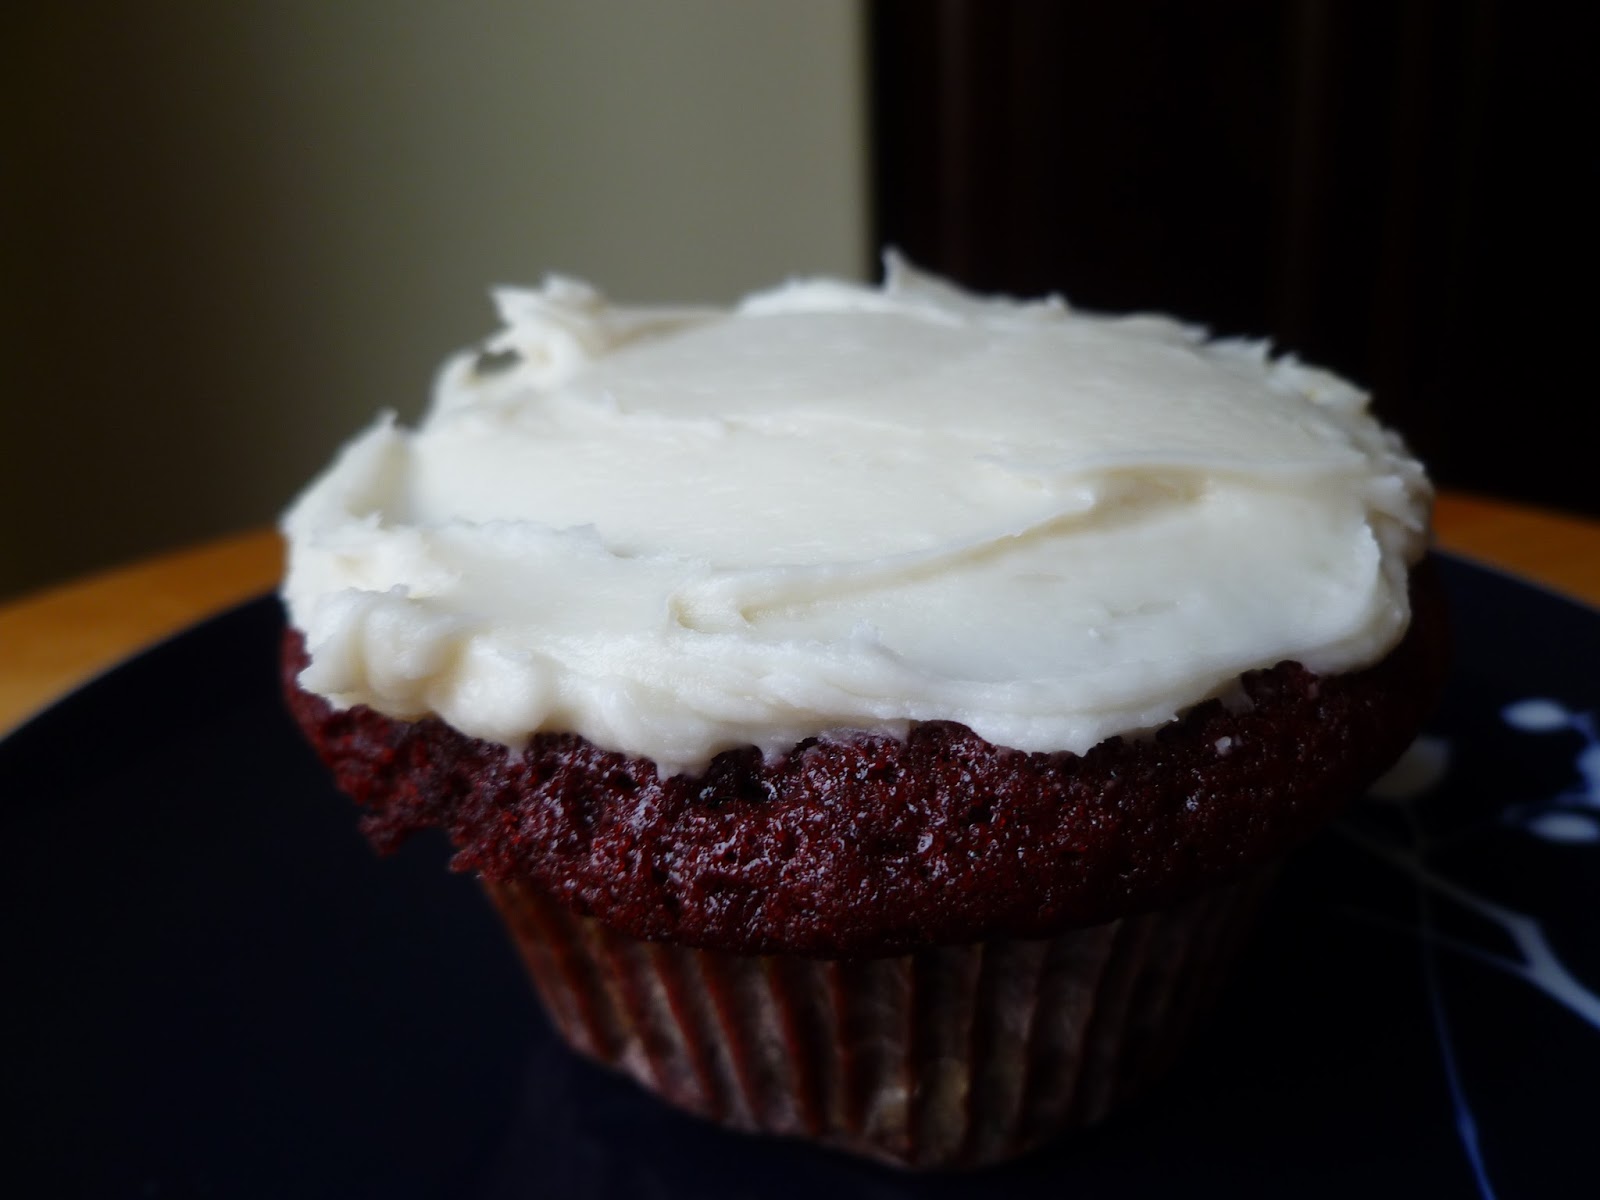 The Pastry Chef's Baking: Sprinkles' Red Velvet Cupcakes